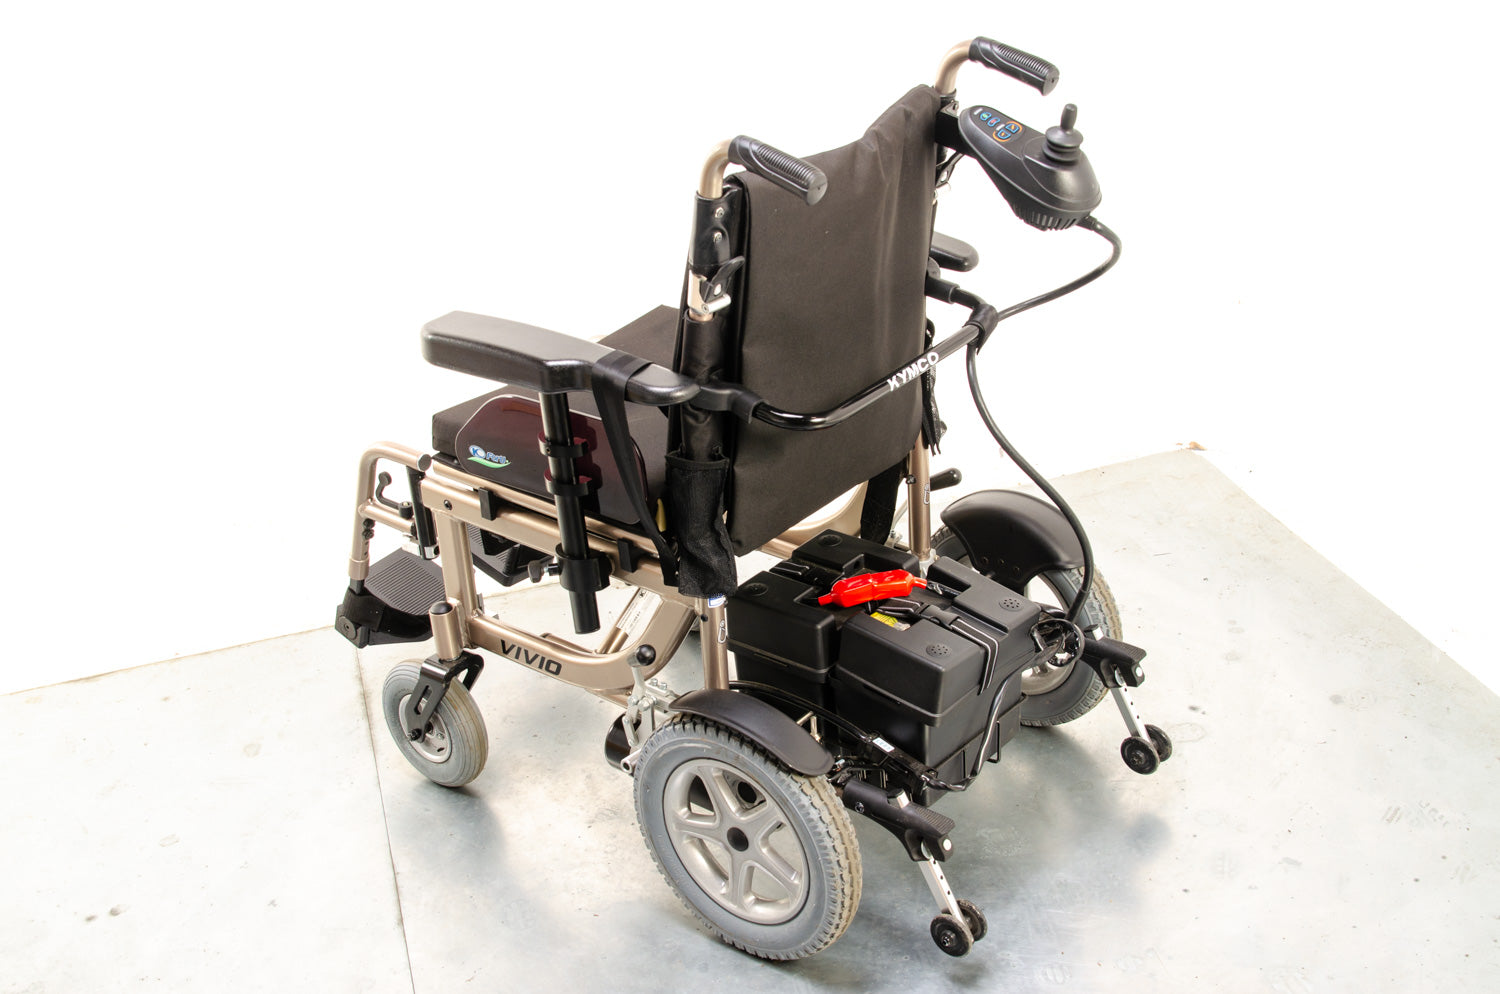 Kymco Vivio Electric Wheelchair Powerchair Used Transportable Folding Lightweight 03678